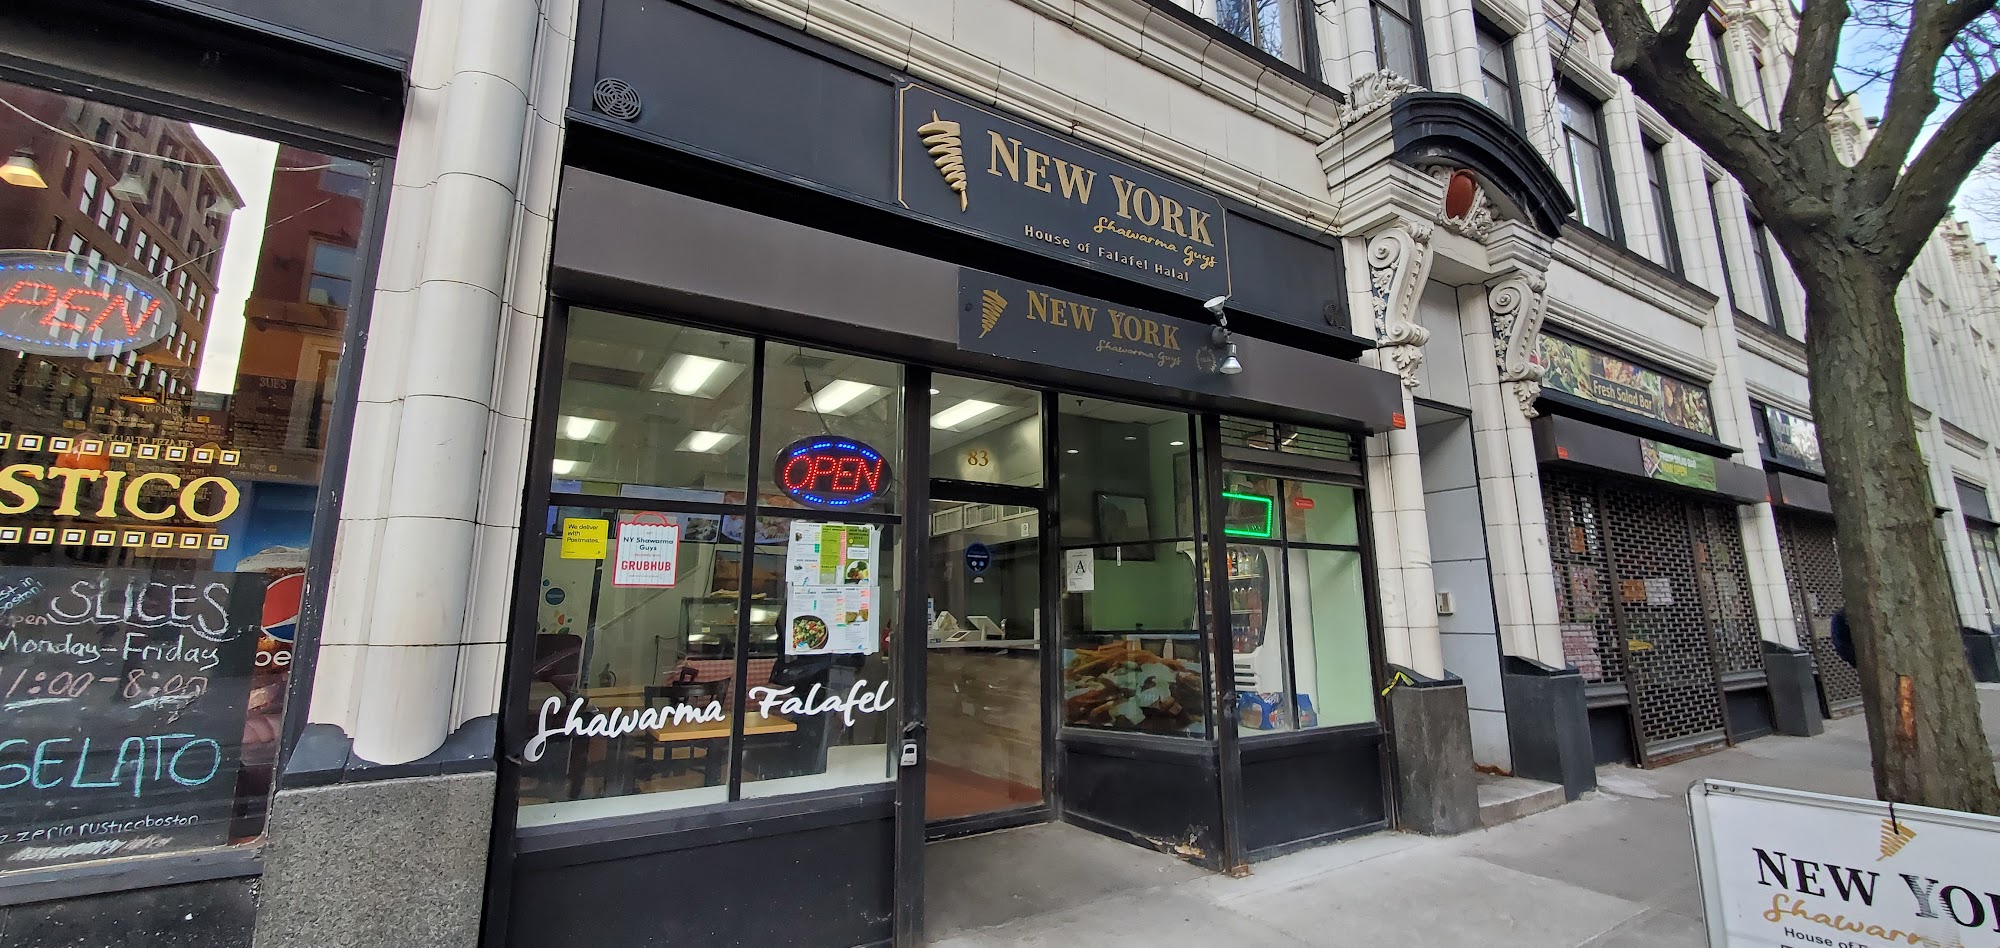 New York Shawarma Guys